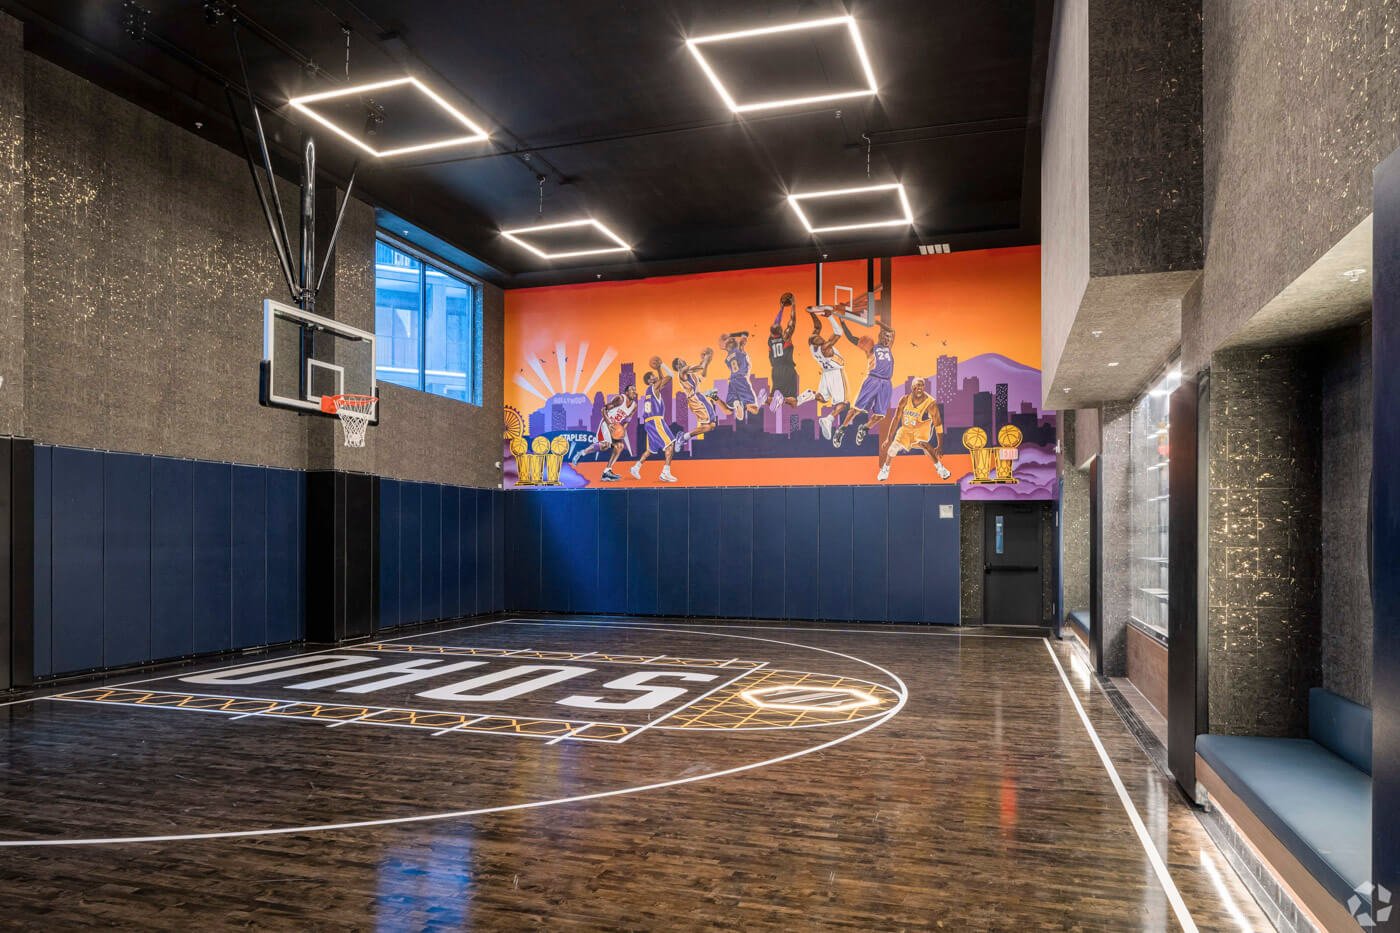 The SoHo Basketball Court